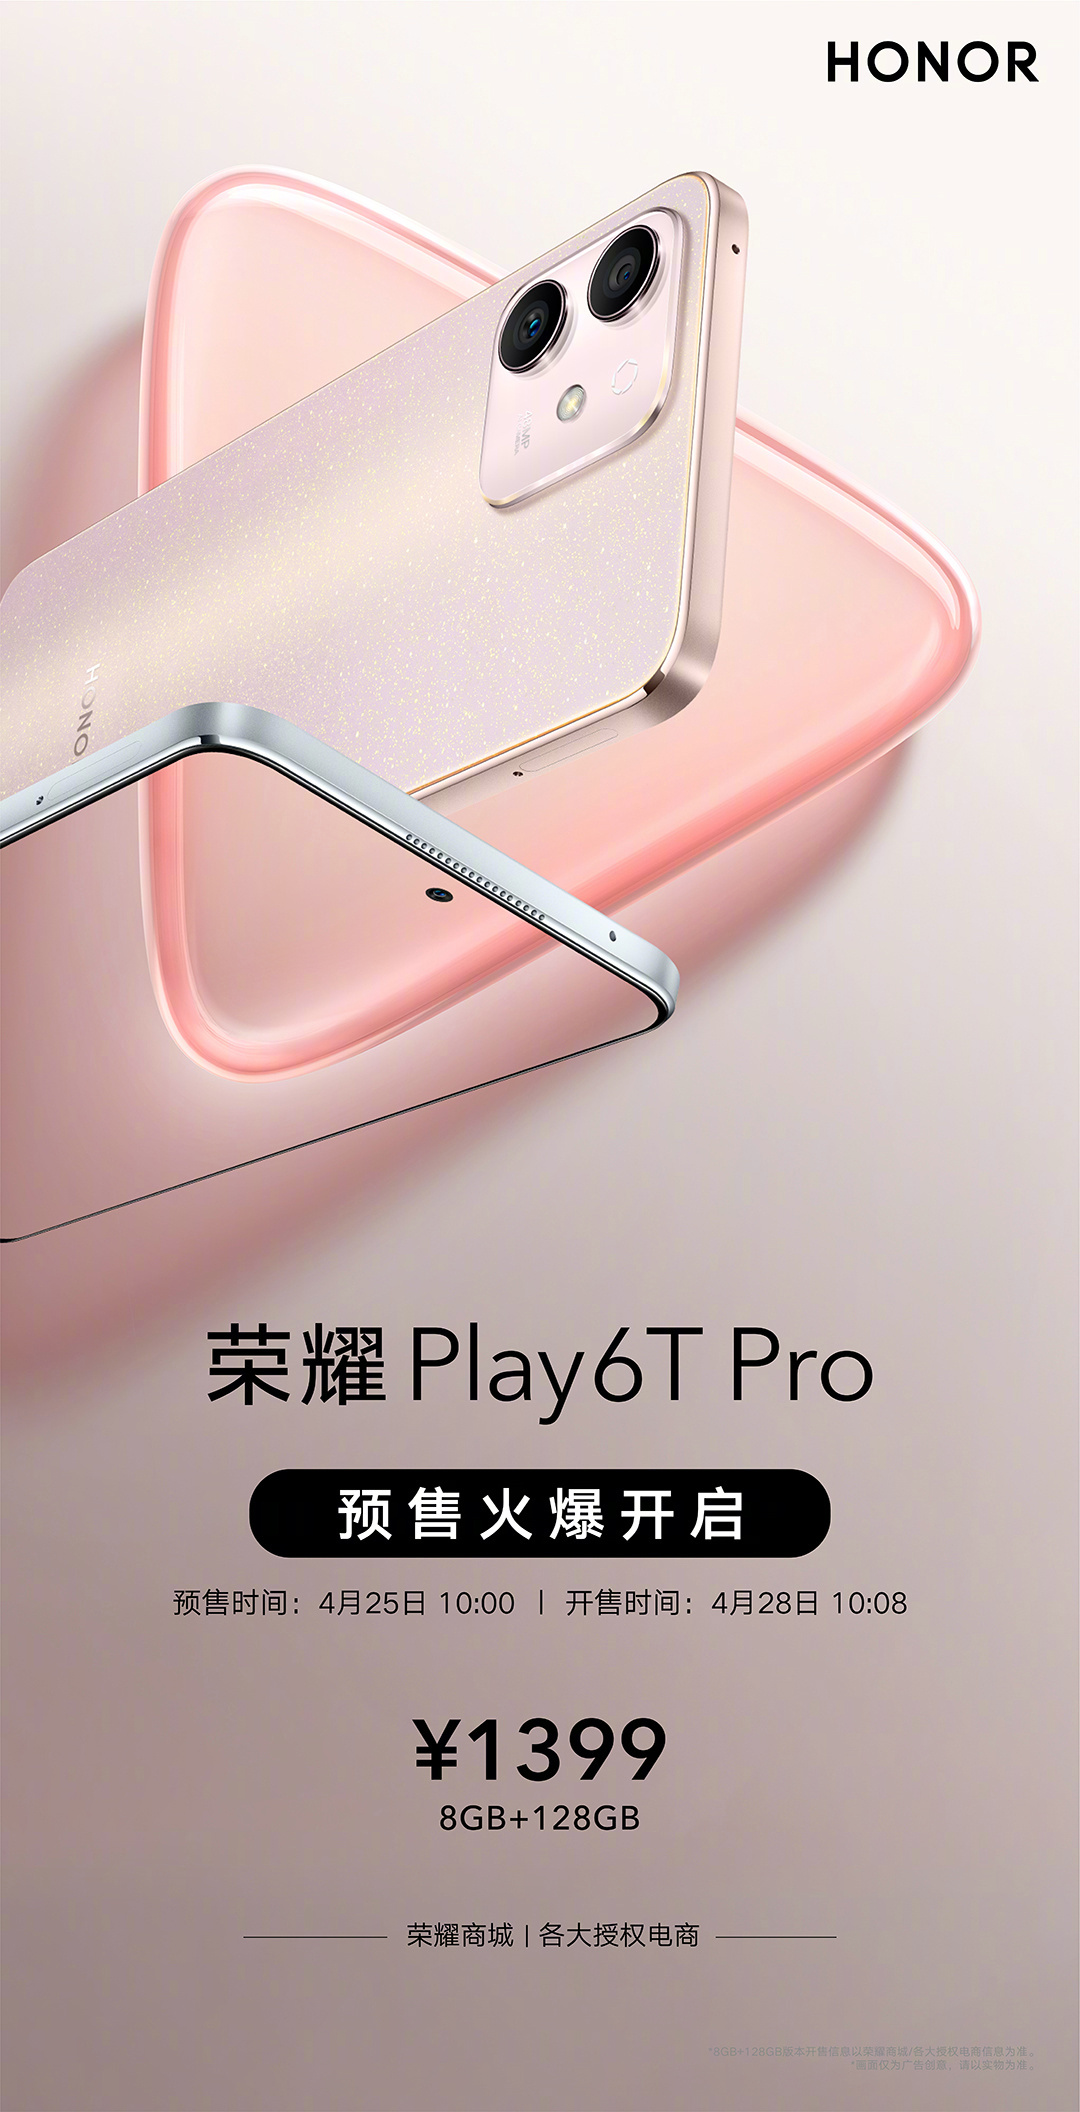 Honor Play 6T Pro en preventa en China